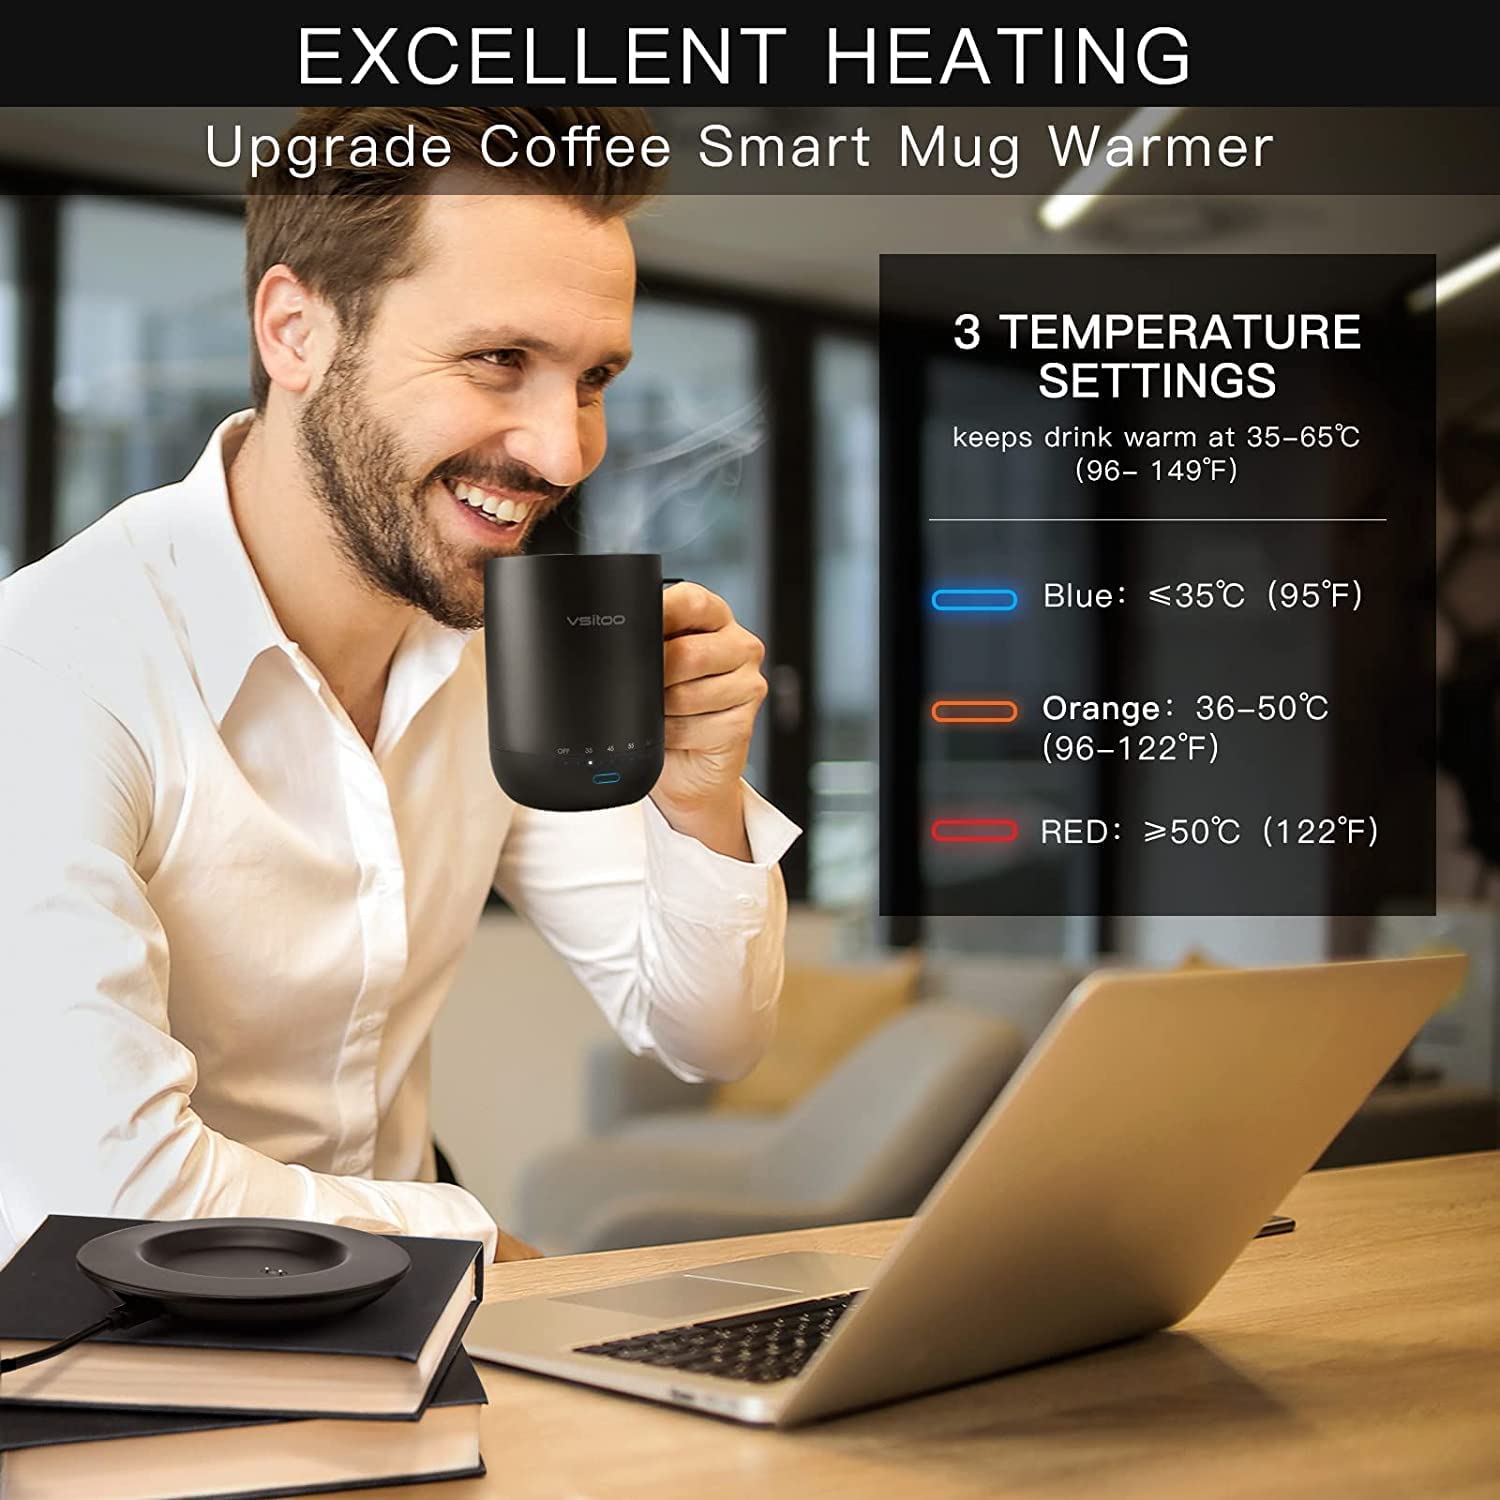 Self Heating Coffee Mug2